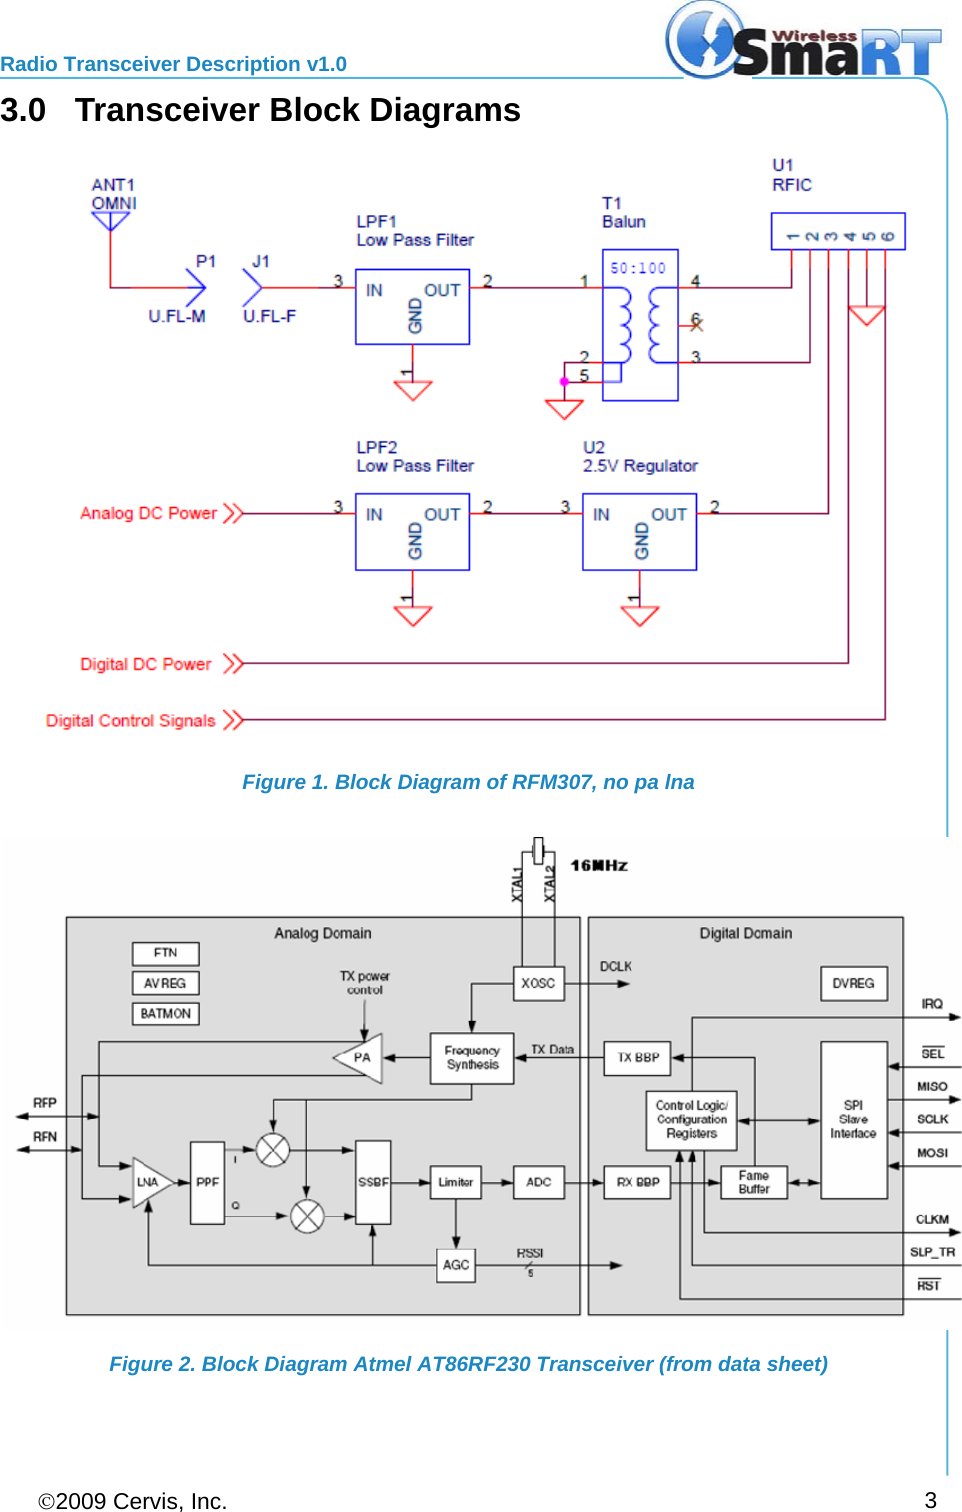 Radio Transceiver Description v1.0 ©2009 Cervis, Inc.      33.0  Transceiver Block Diagrams  Figure 1. Block Diagram of RFM307, no pa lna  Figure 2. Block Diagram Atmel AT86RF230 Transceiver (from data sheet) 